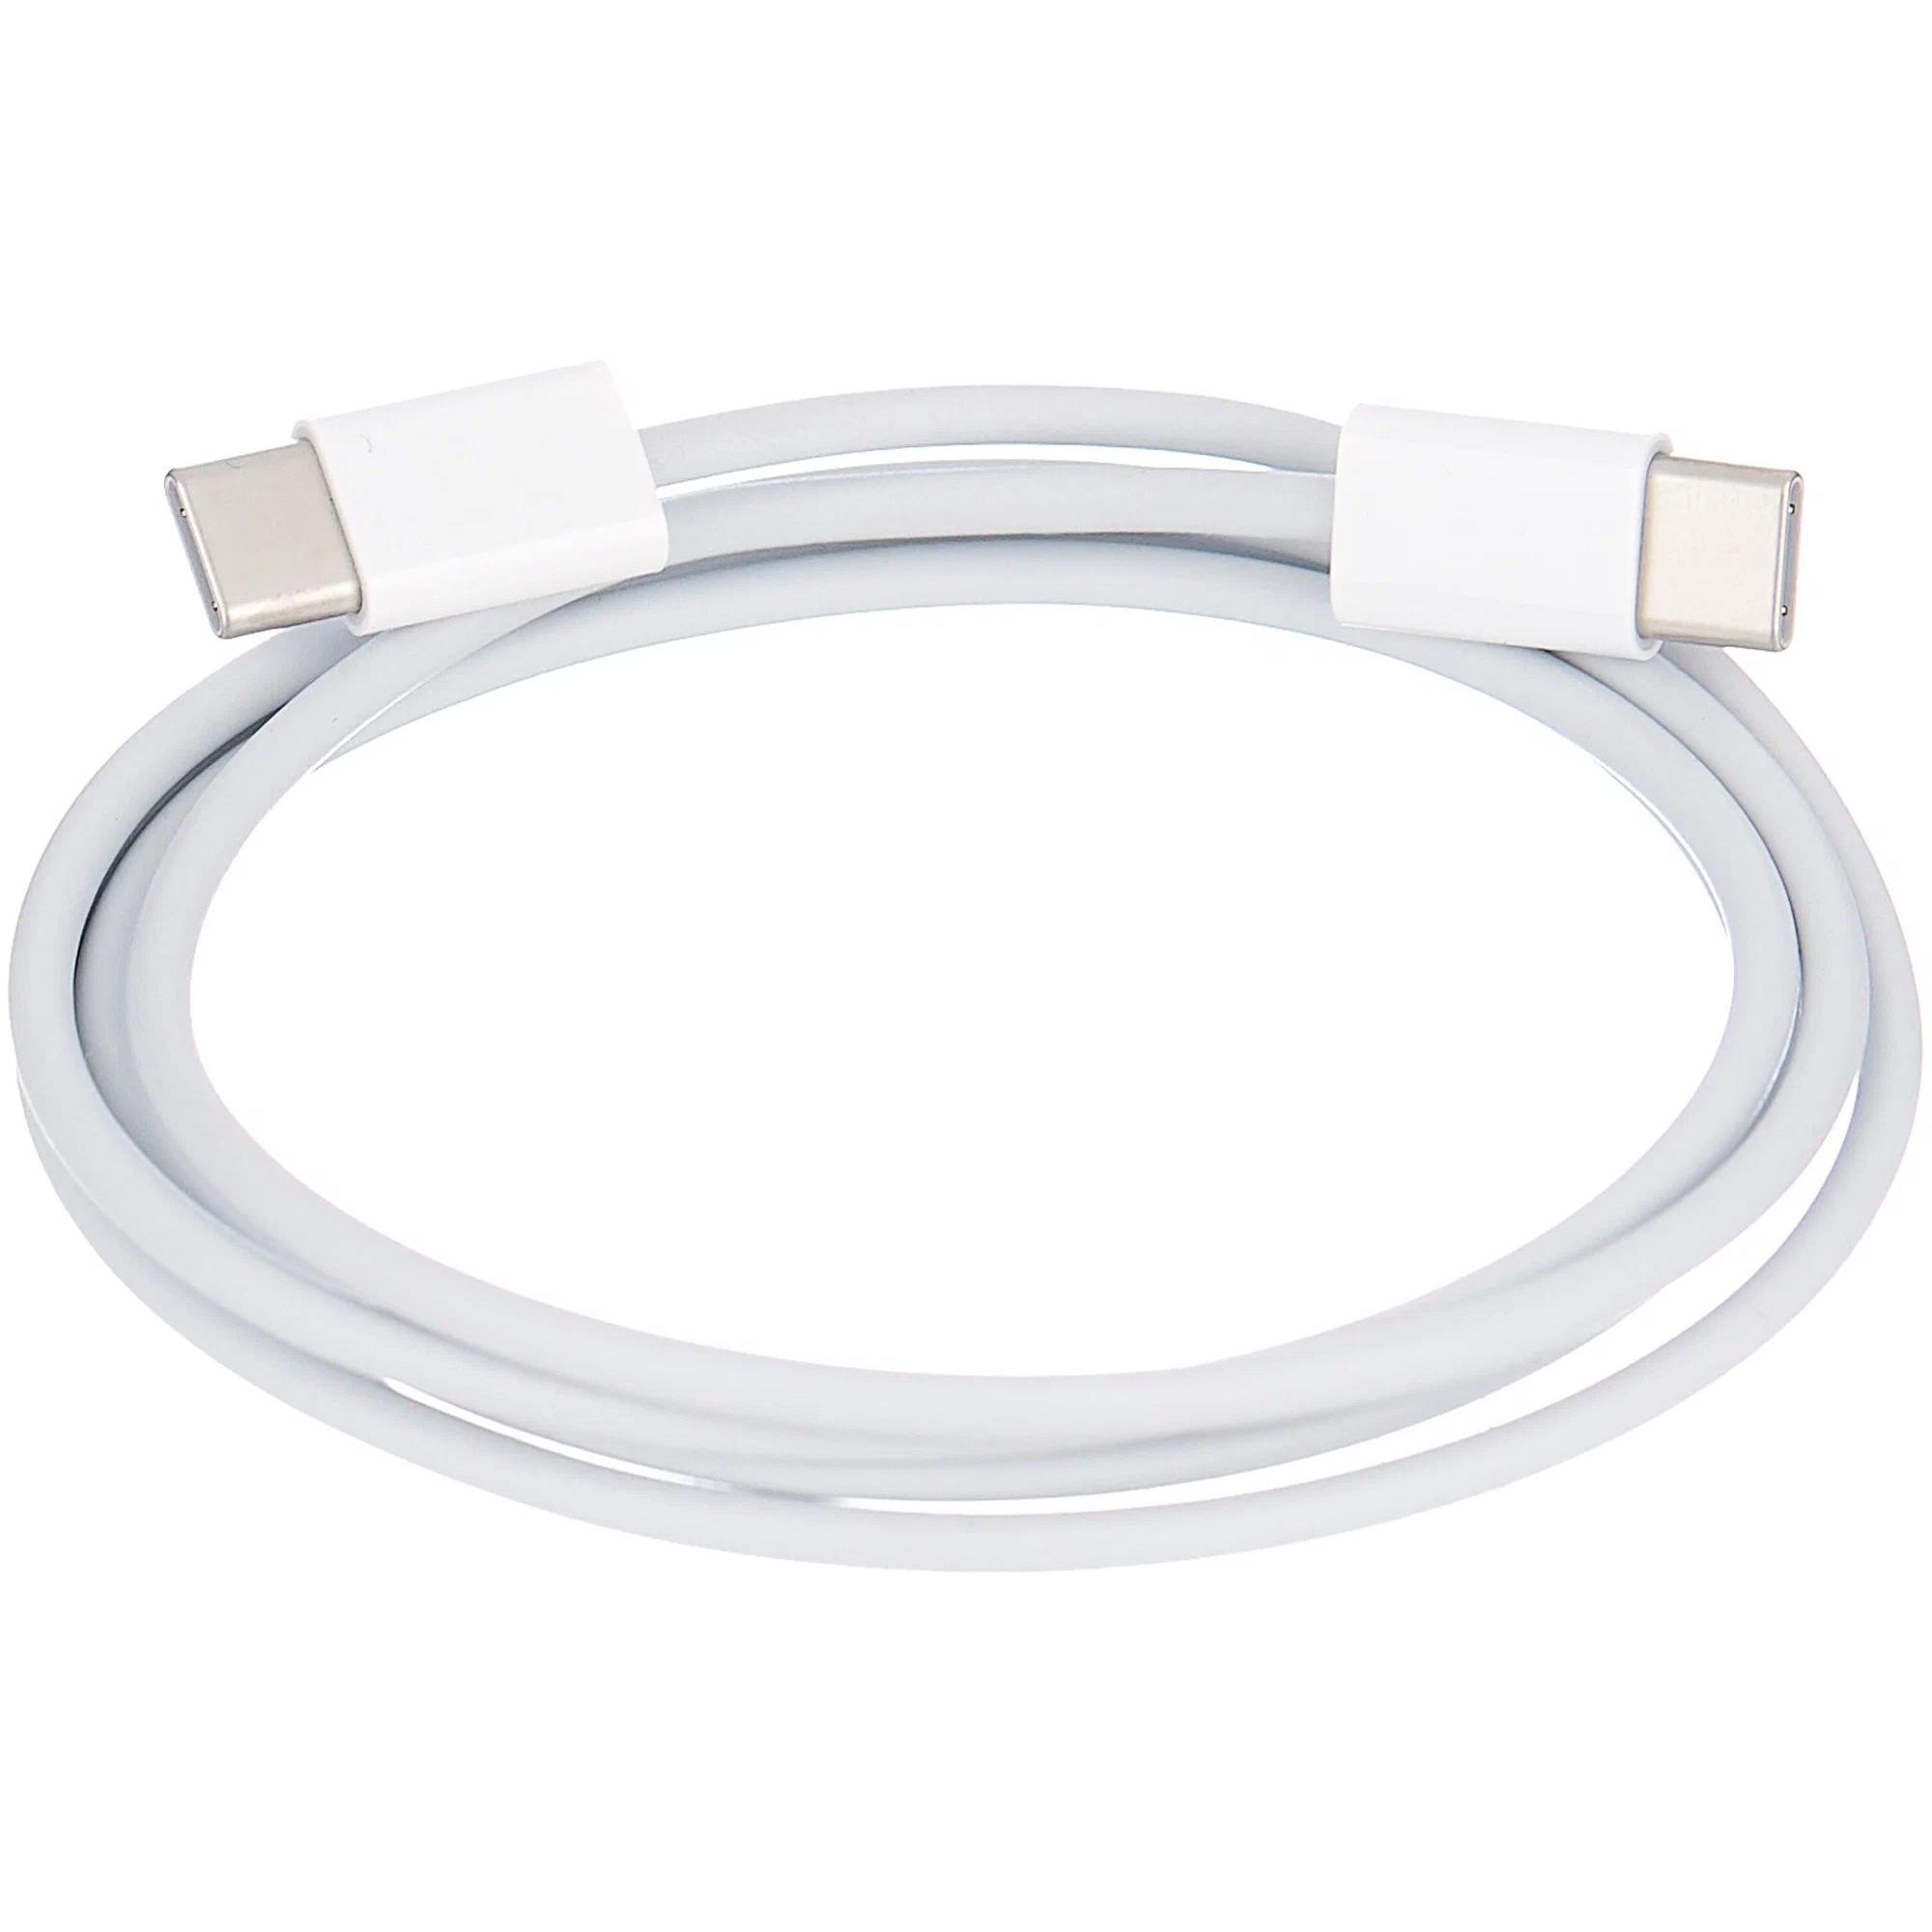 Кабель Apple USB-C Charge Cable (1m) MM093ZM/A for apple ipad mini 1 2 3 4 5 ipad 2 3 4 ipad 5th 6th 7th ipad air air 2 3 ipad pro tablet stand heavy duty protective case